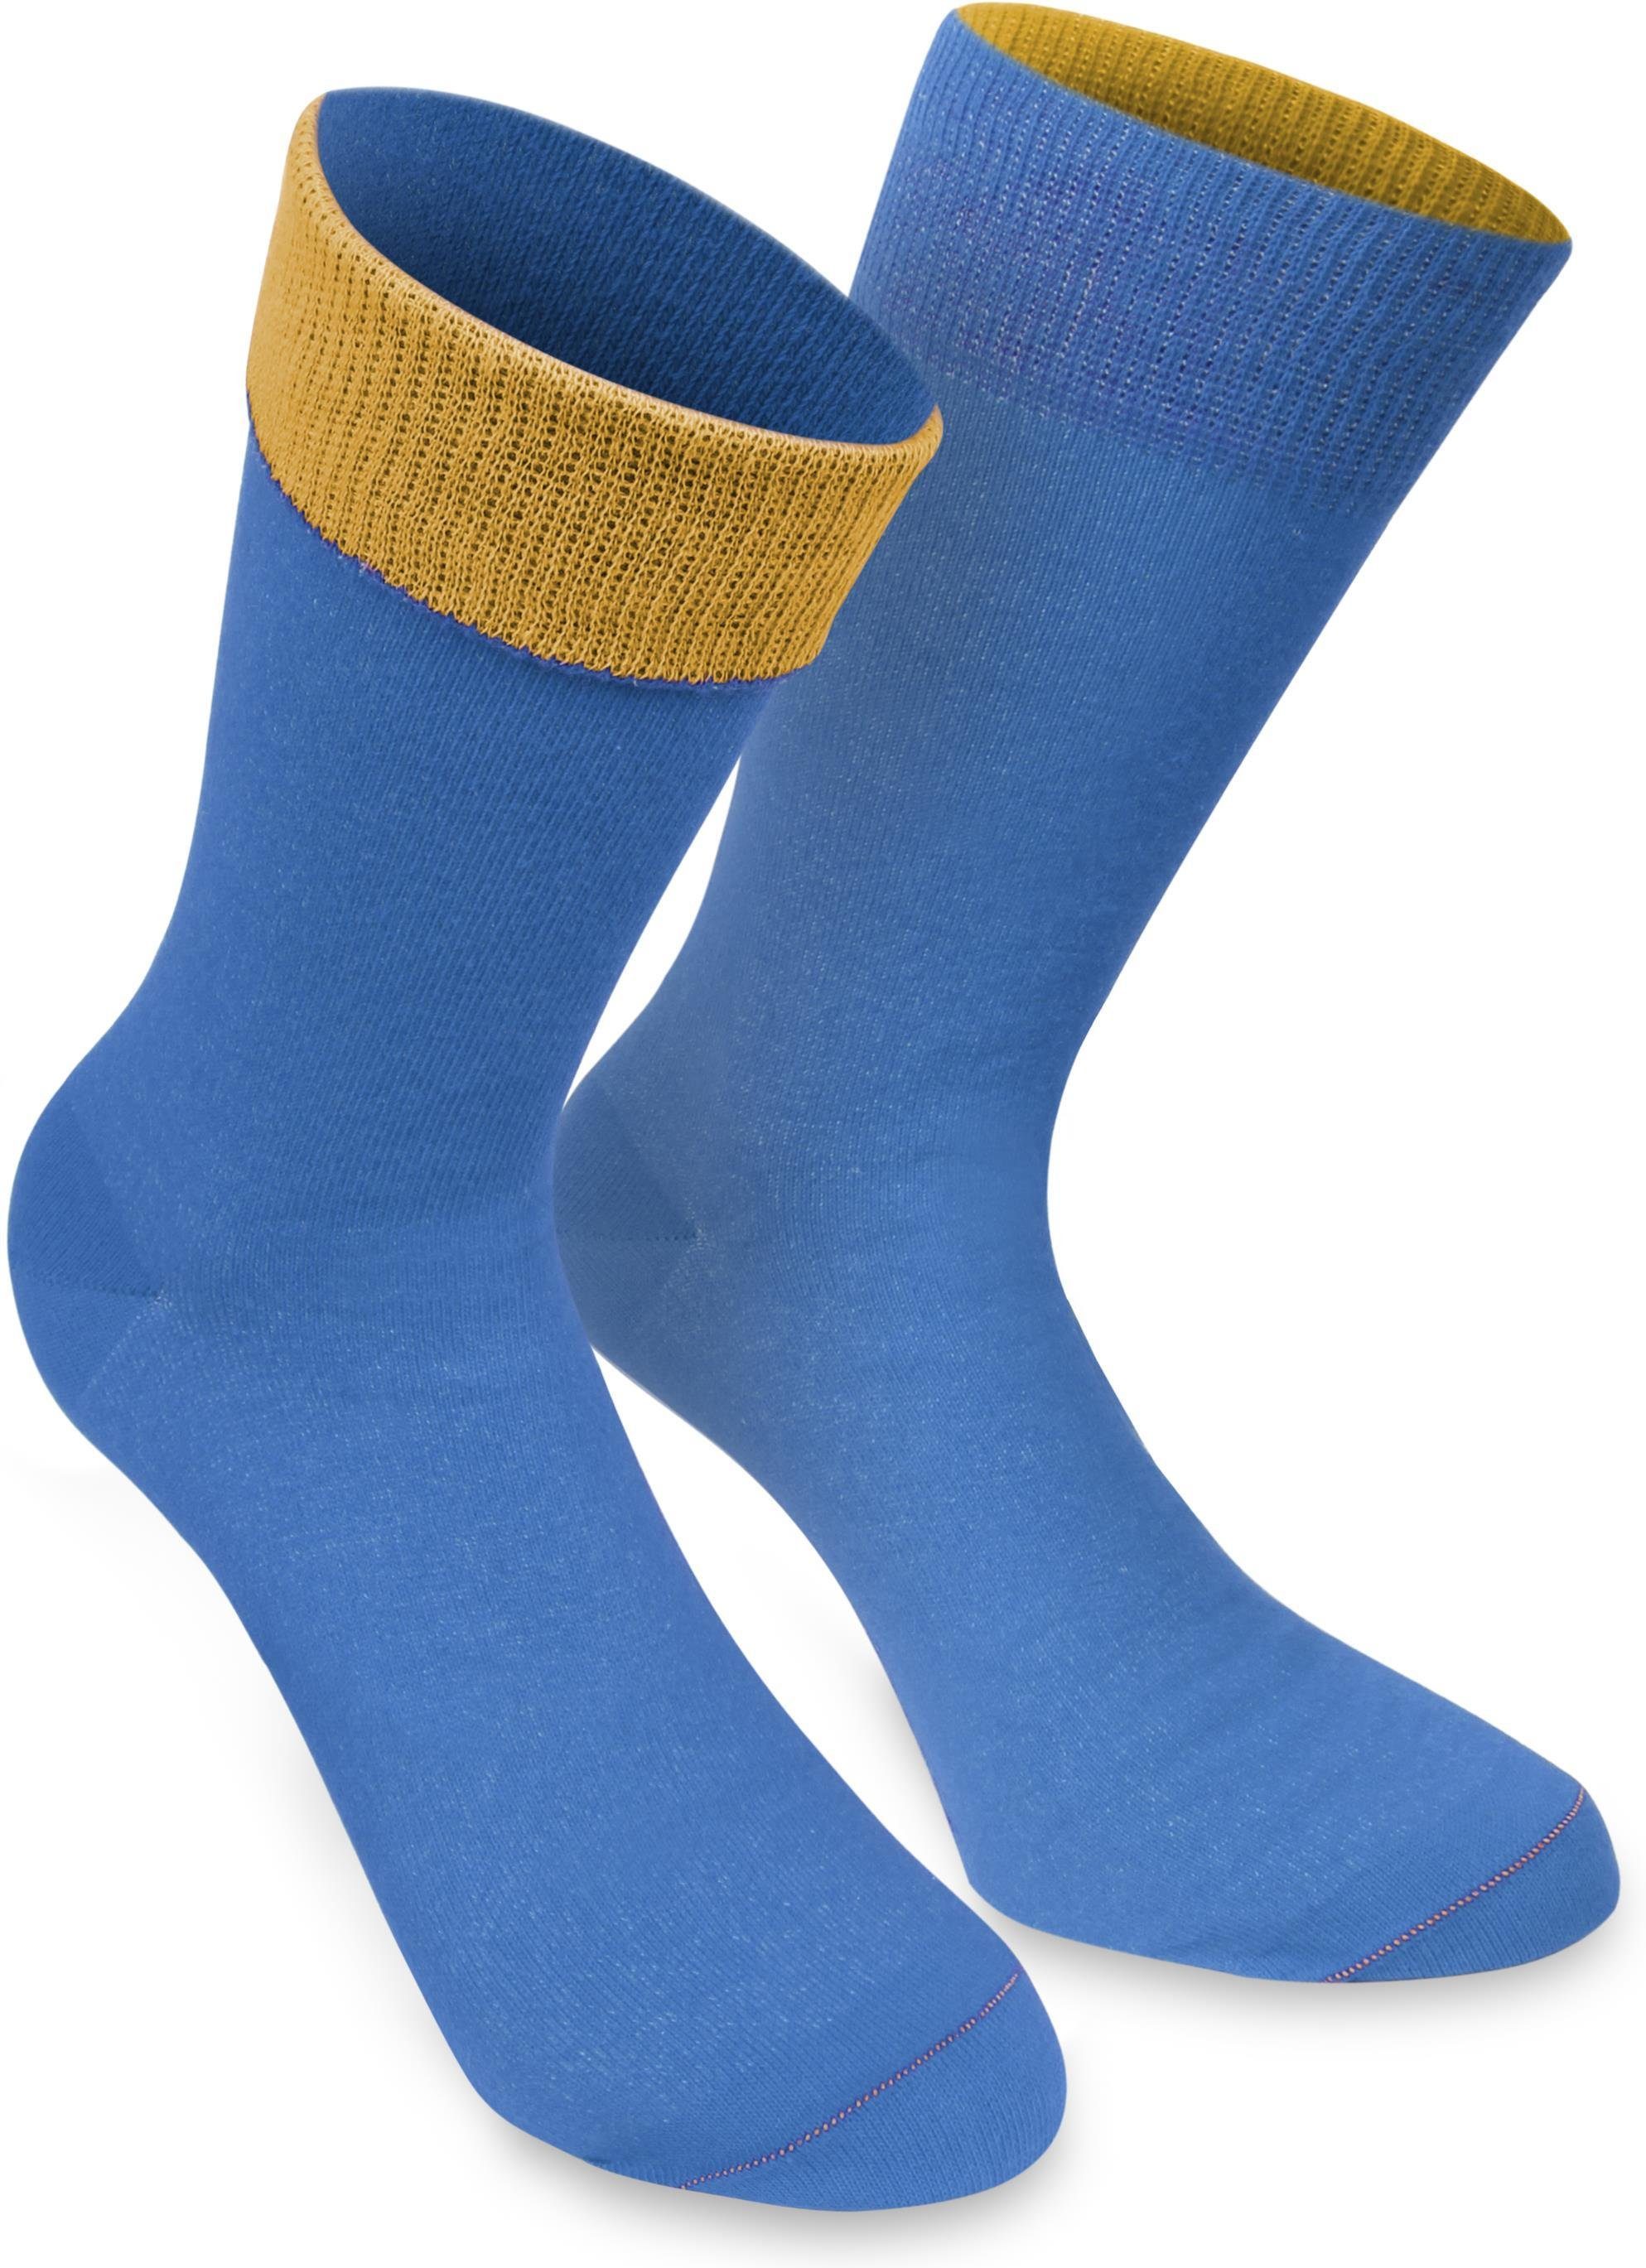 farbig Basicsocken normani Himmelblau/Aprikose (1 abgesetzter Bi-Color Socken Paar) Bund 1 Paar